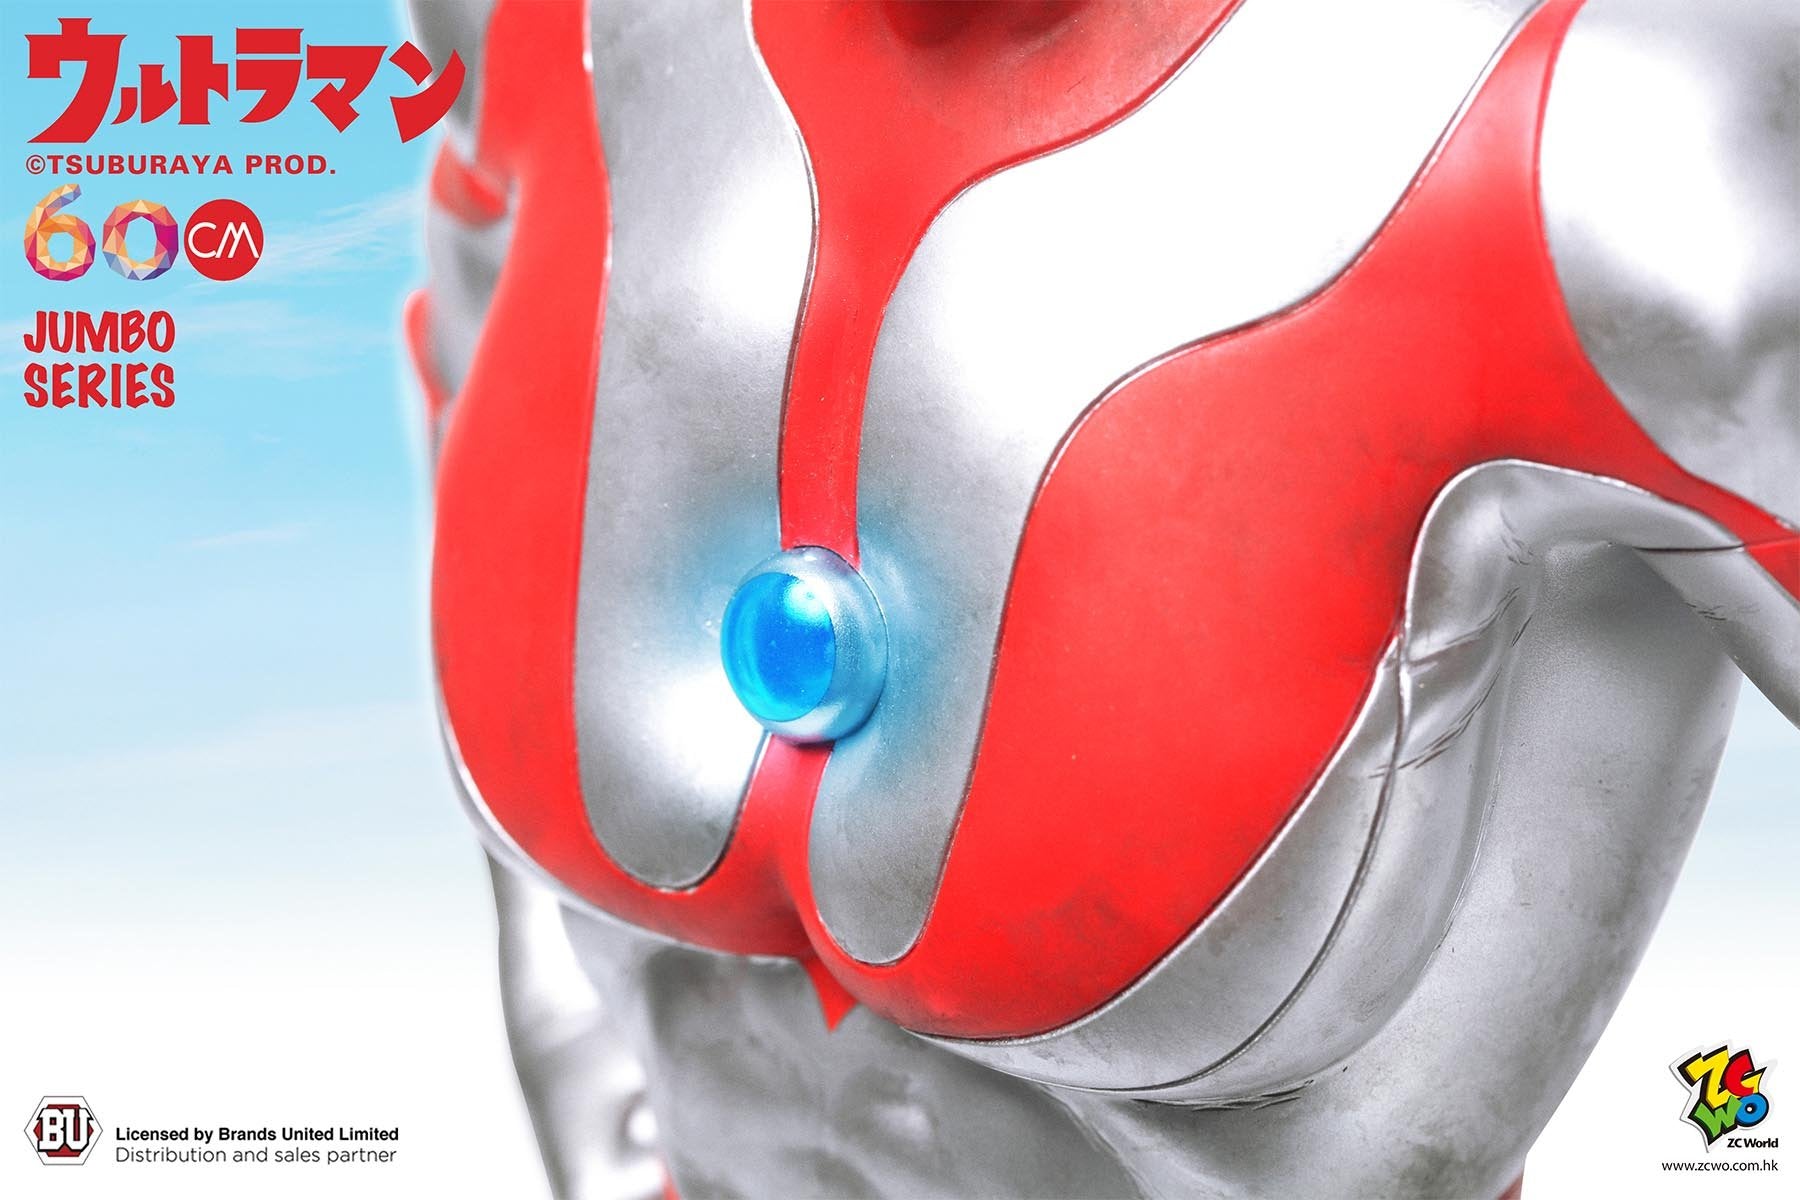 ZC World - 60cm Jumbo Series - Ultraman - Marvelous Toys